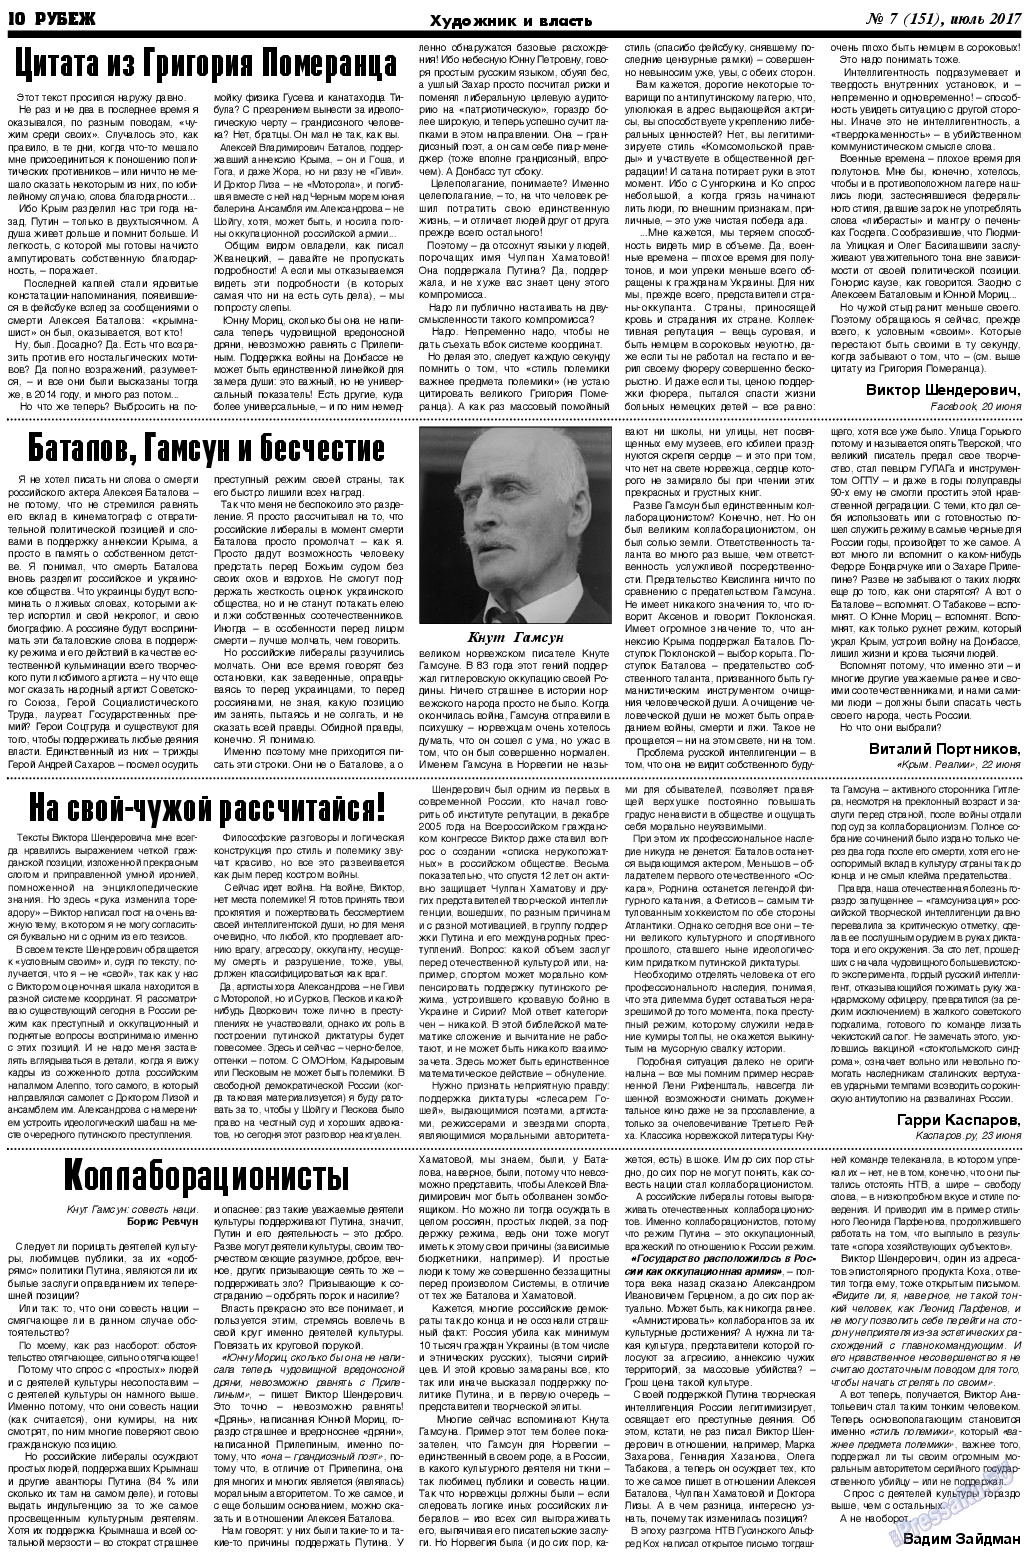 Рубеж, газета. 2017 №7 стр.10